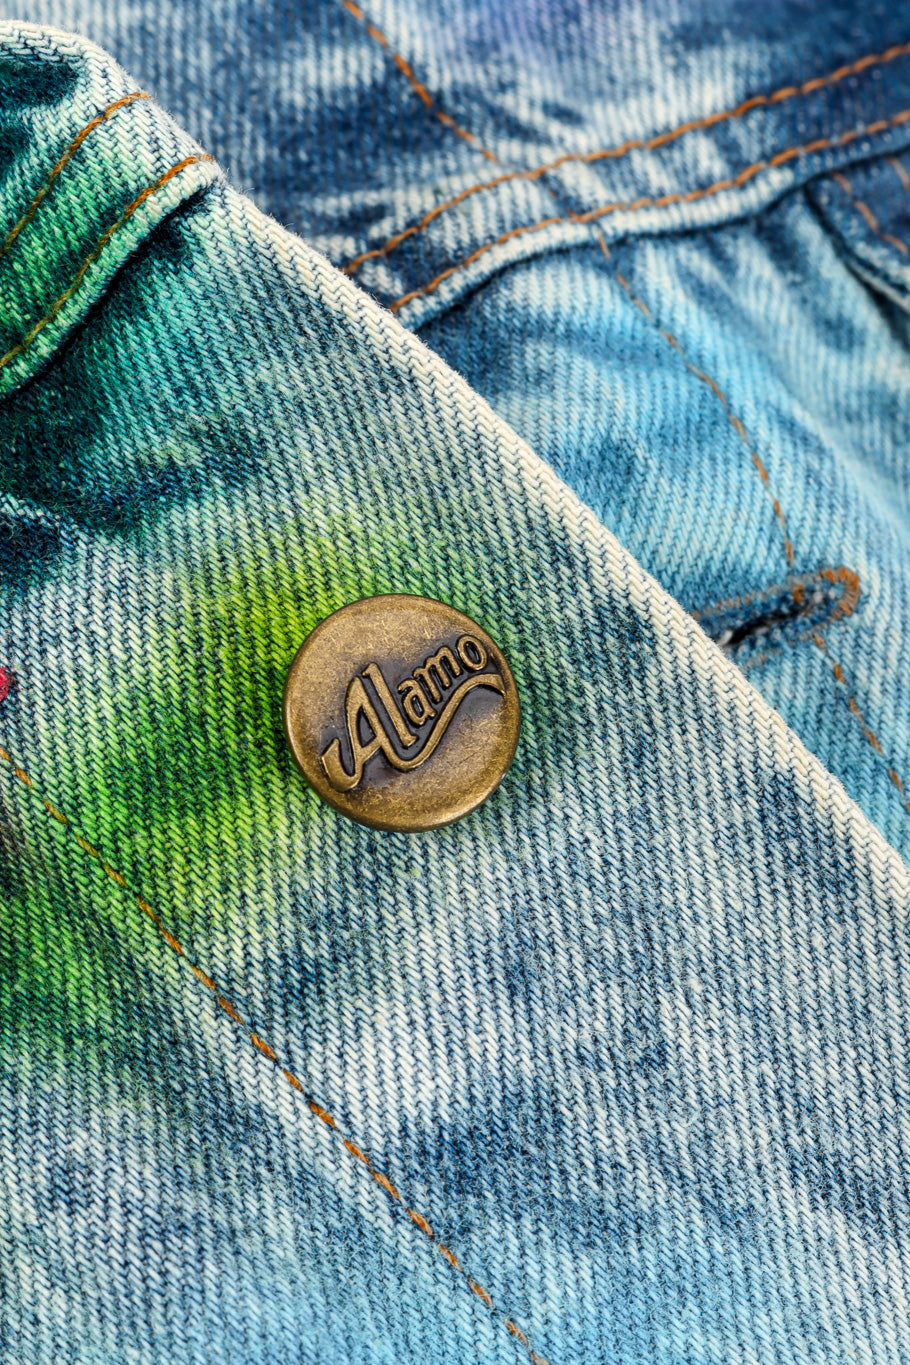 Vintage Tony Alamo Florida Denim Jacket engraved signature button closeup @Recessla